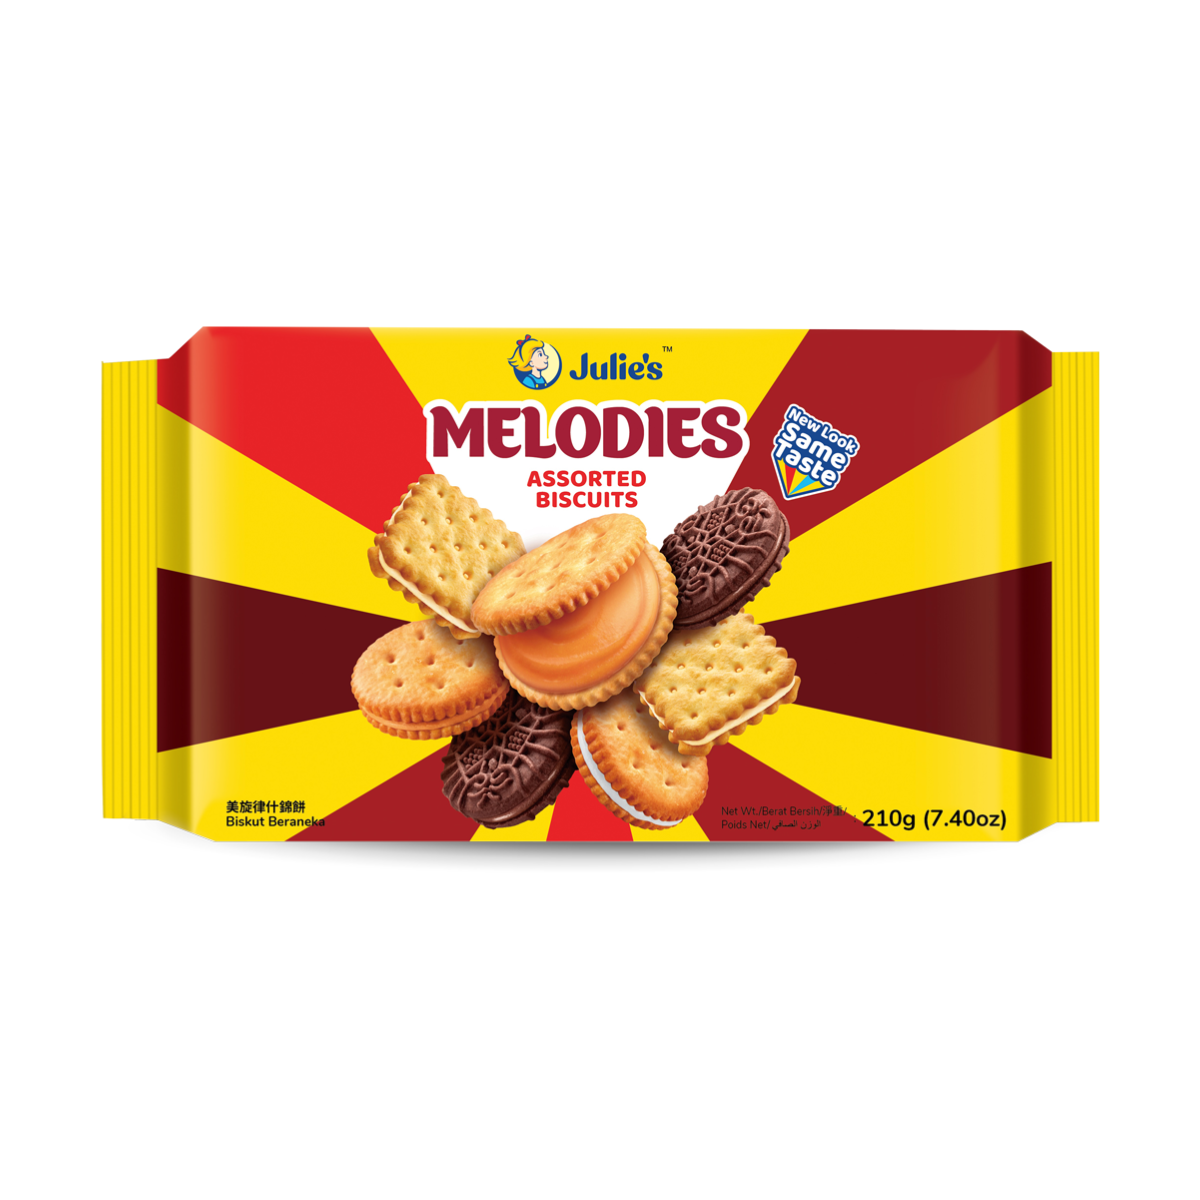 Julie's Melodies Assorted Biscuits - New Look Same Taste - 210g